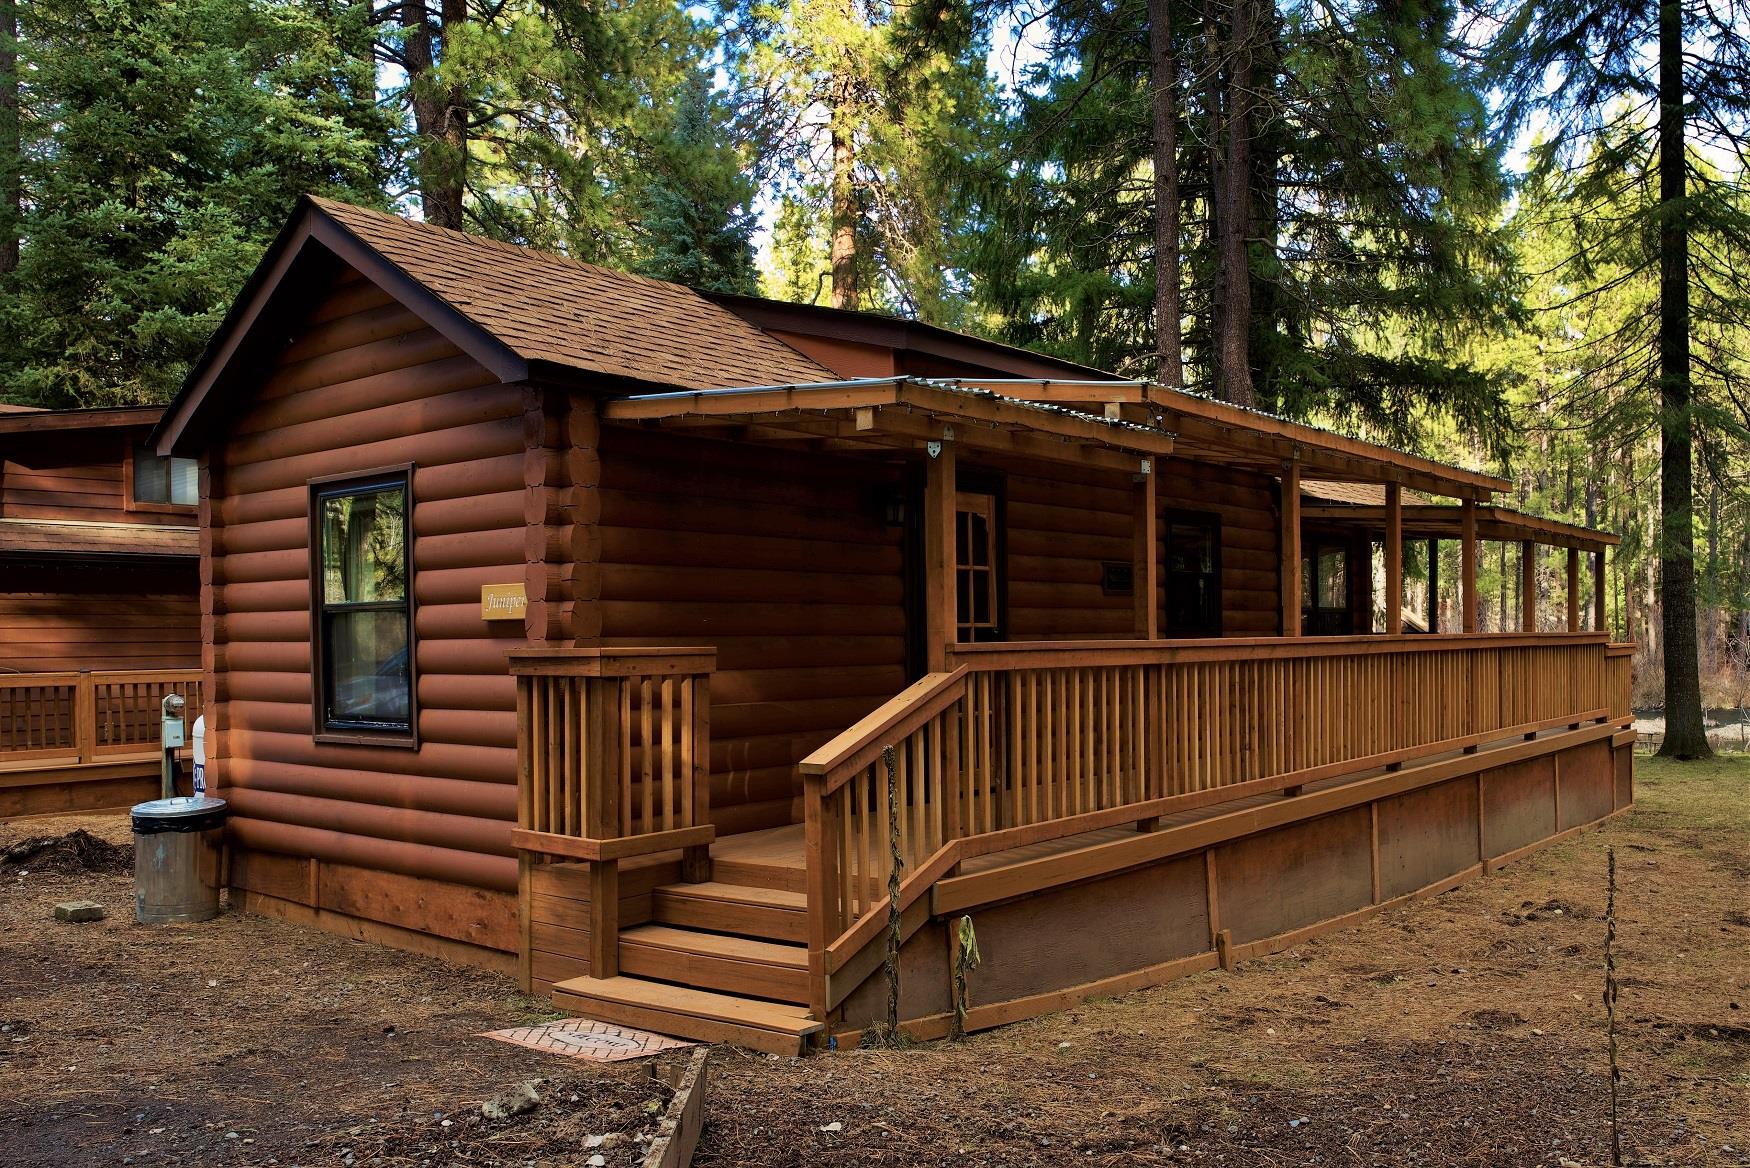 Juniper Cabin, on the banks of the Metolius River, at Cold Springs Resort in Camp Sherman, Oregon